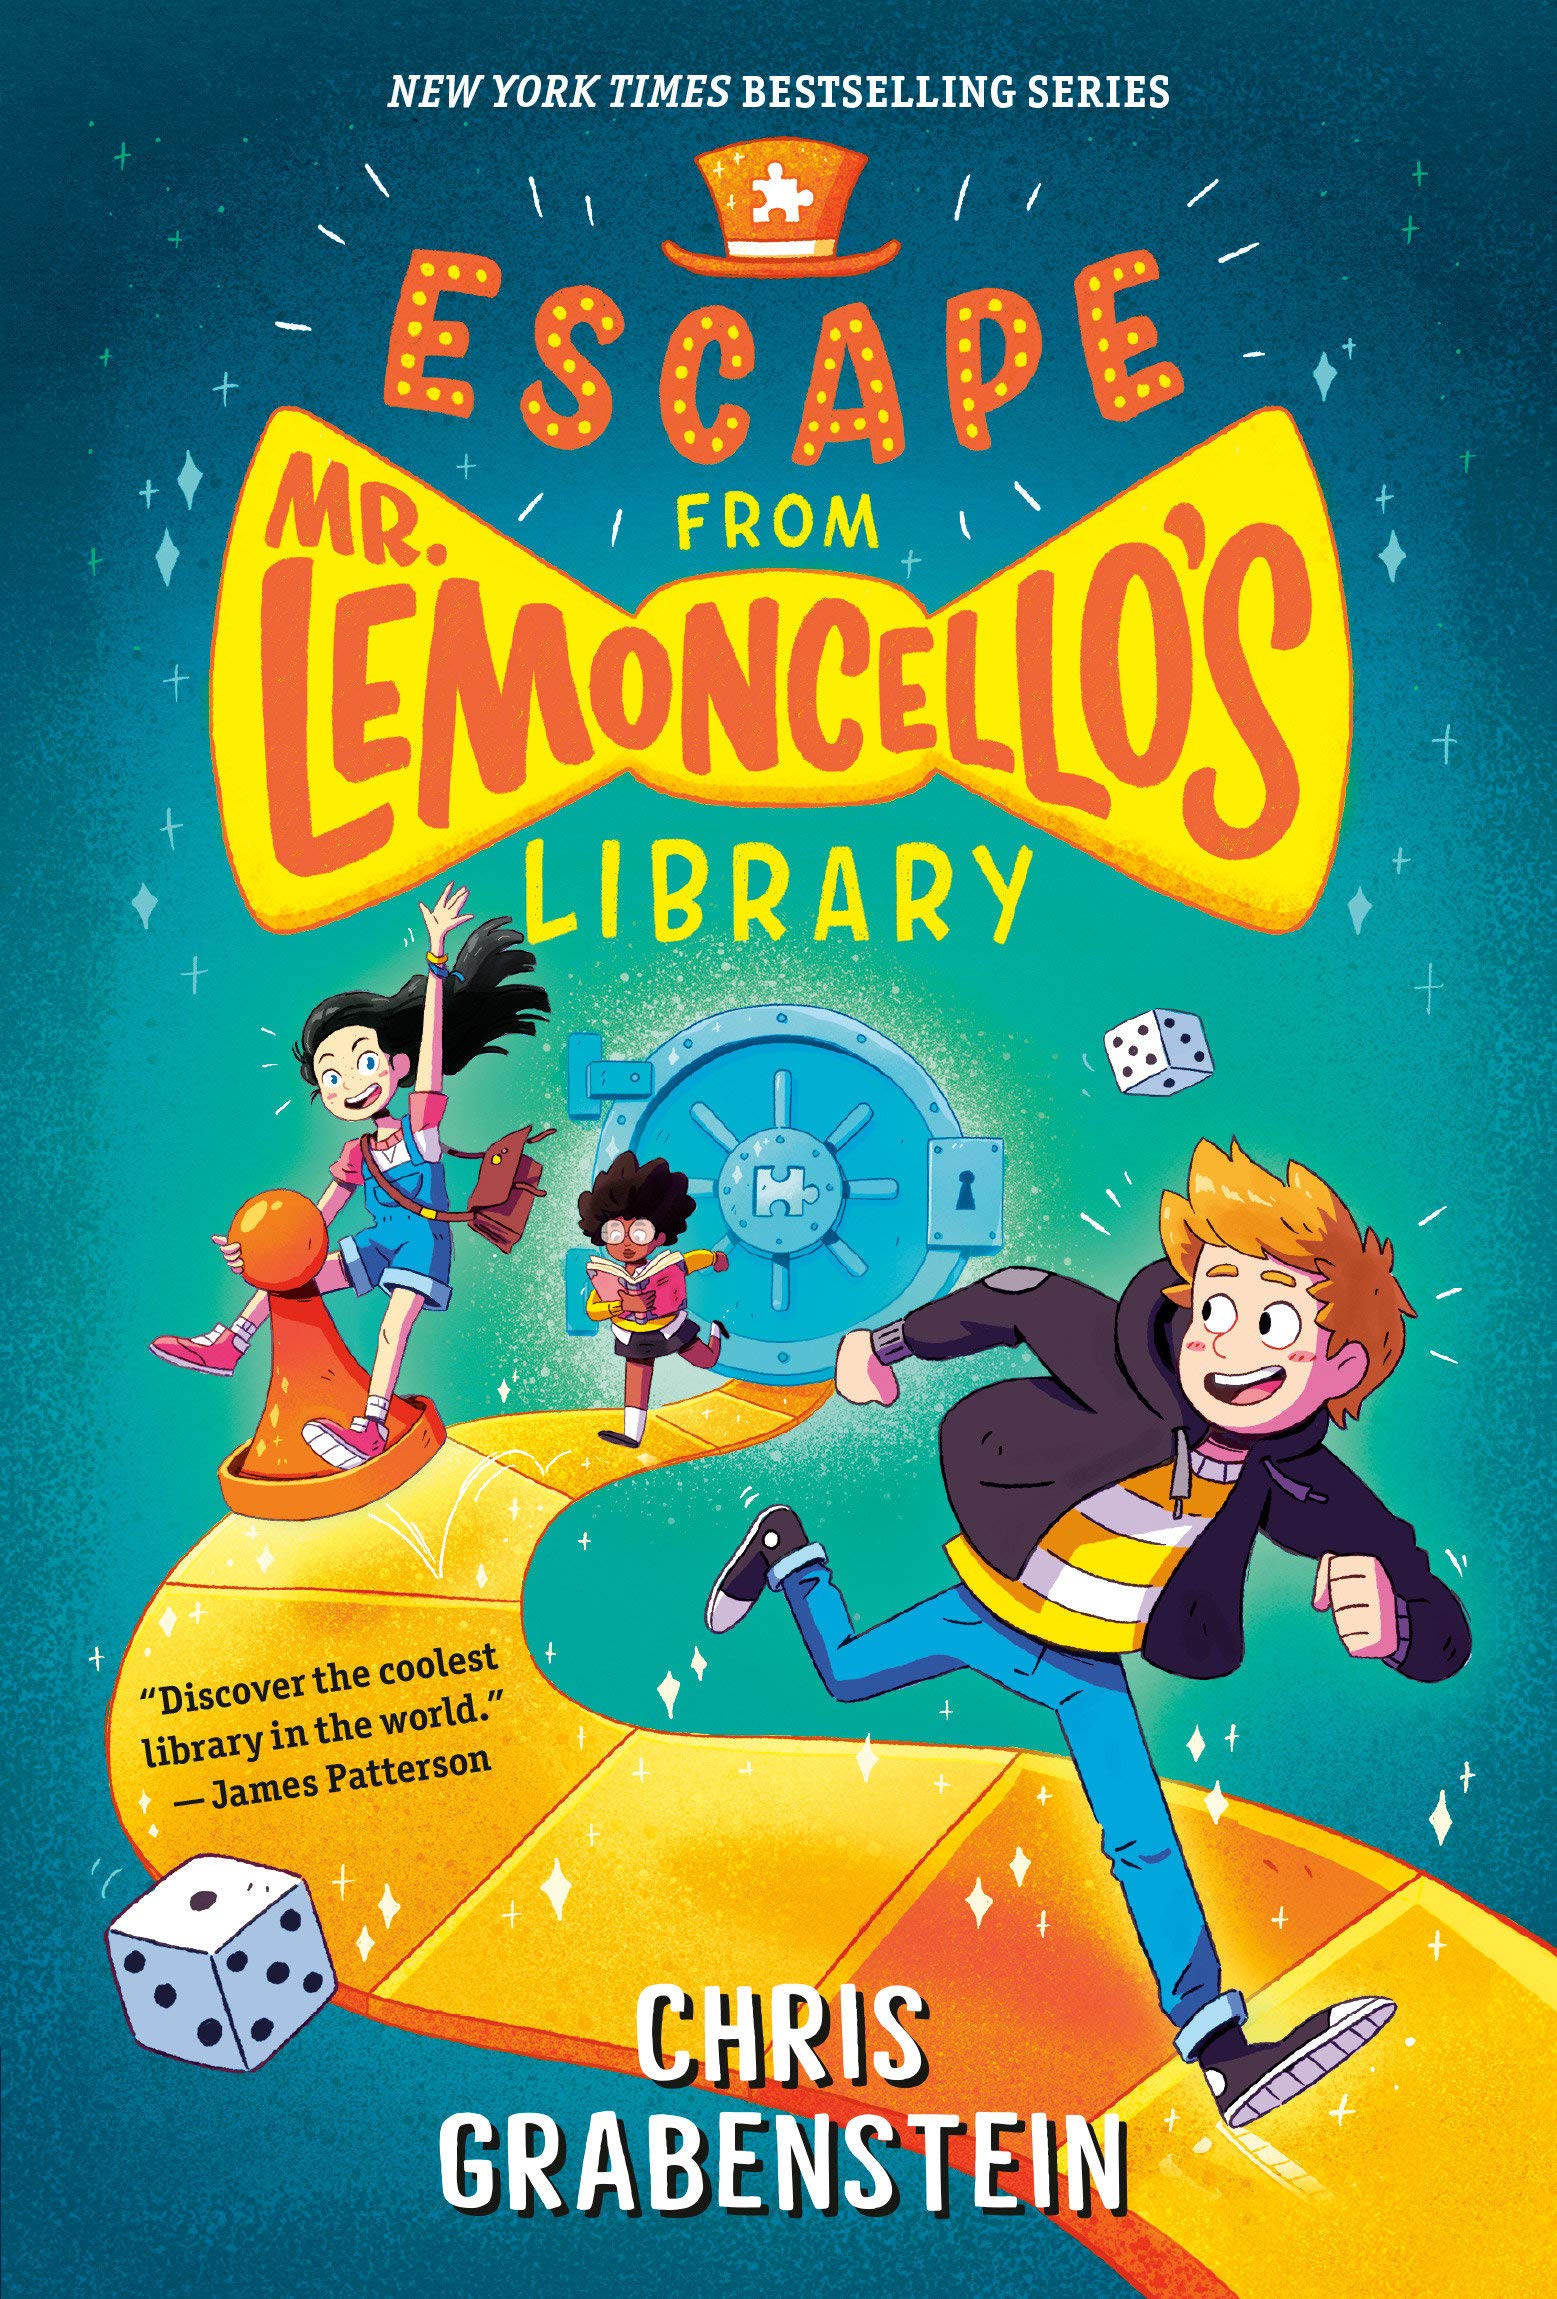 Escape from Mr. Lemoncello’s Library book cover